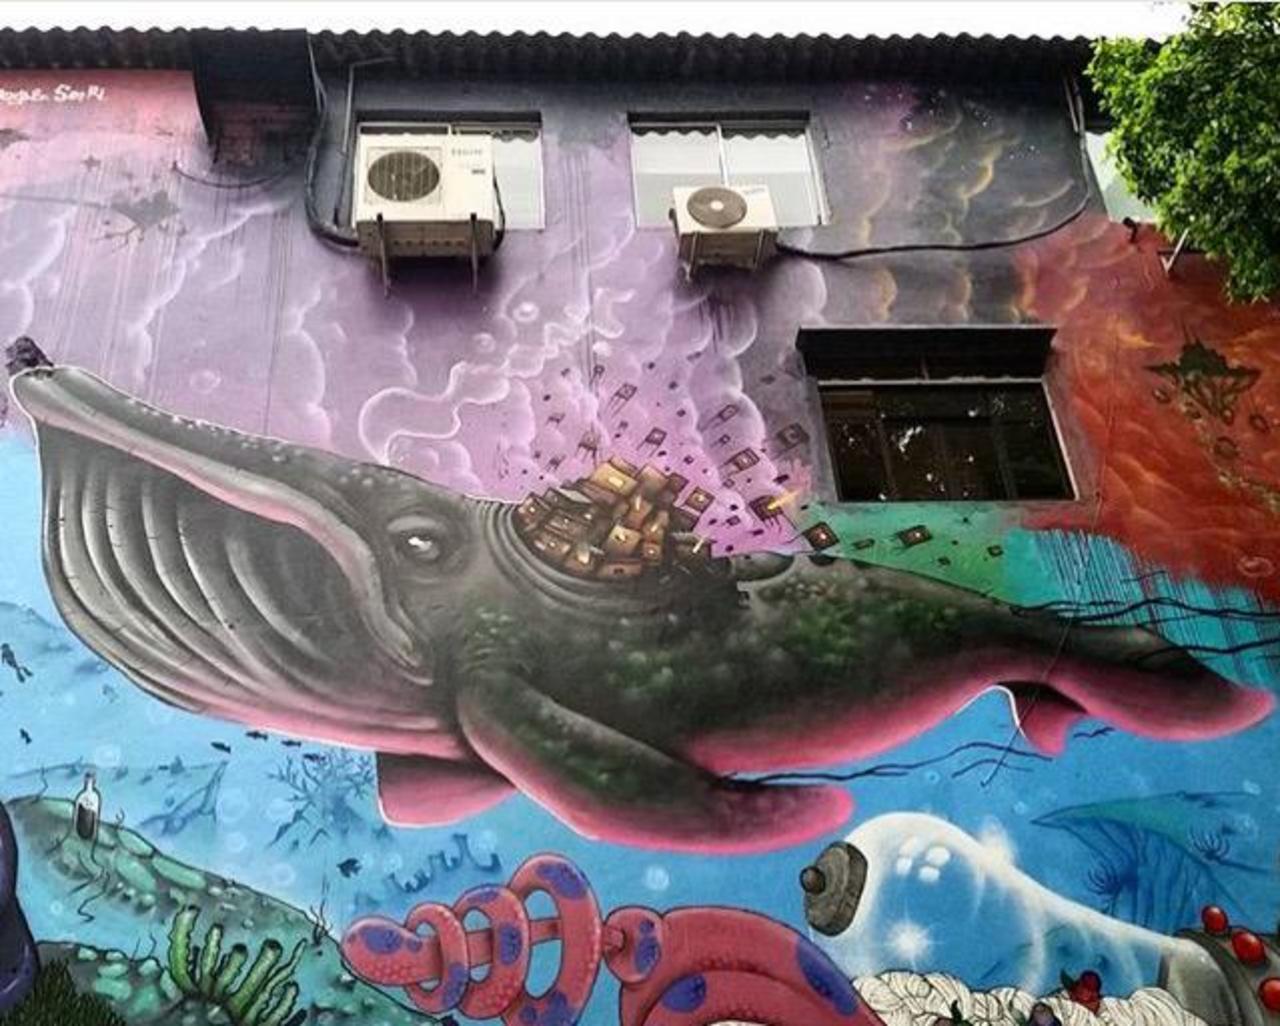 Street Art by joks_johnes Pinheiros, São Paulo 

#art #mural #graffiti #streetart http://t.co/VwtwLoJ0Cx